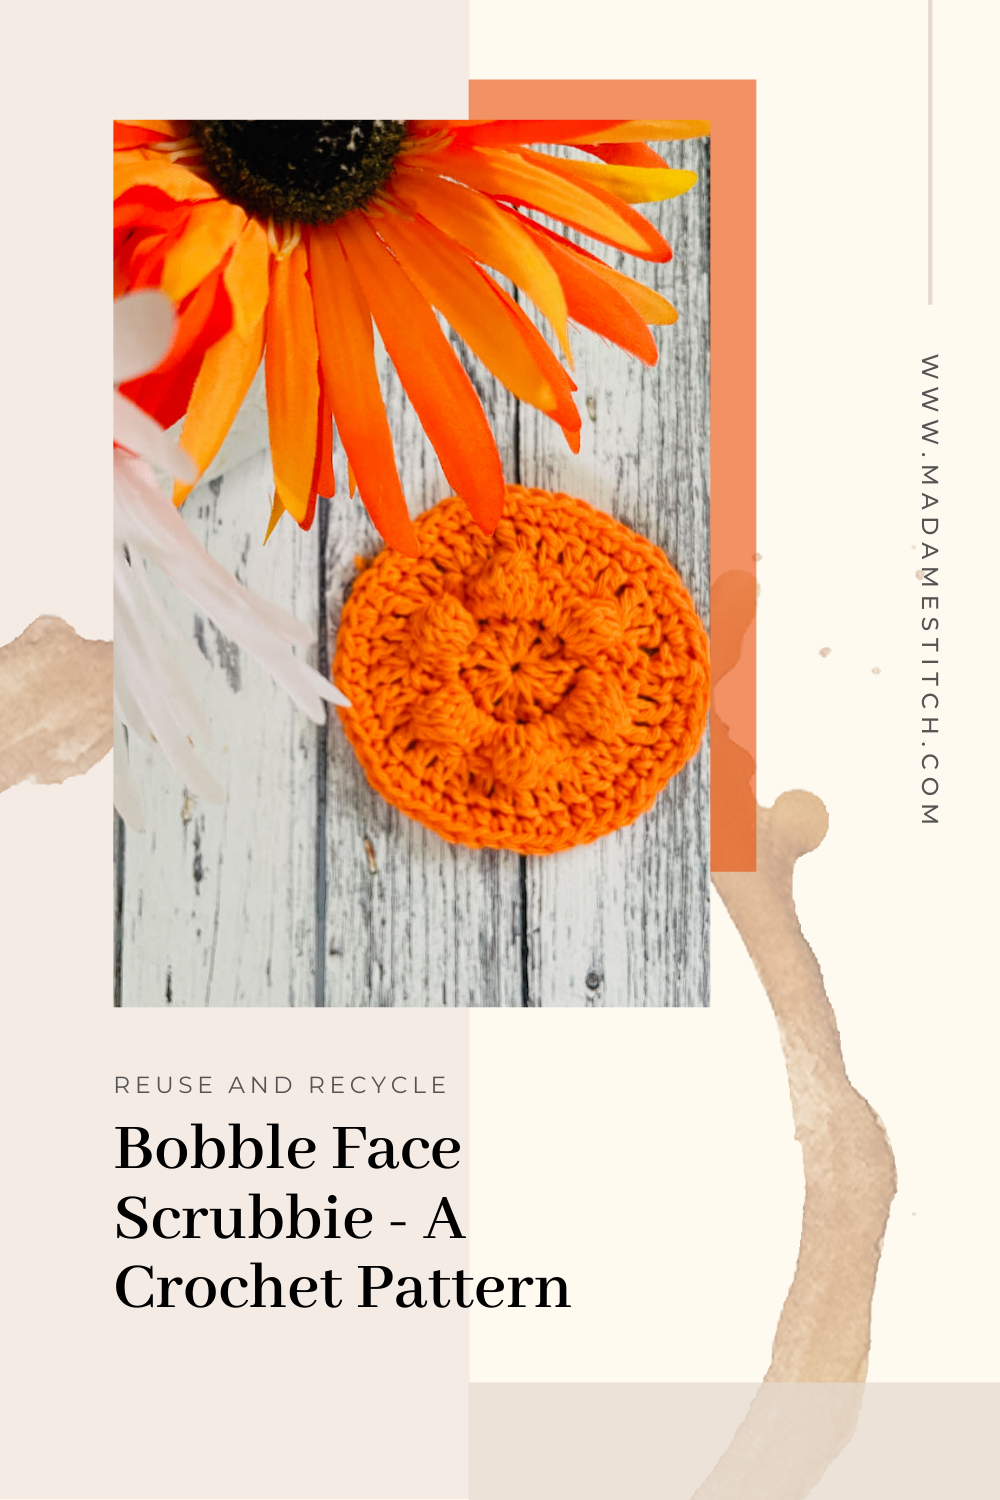 The bobble stitch face scrubbie crochet pattern by MadameStitch